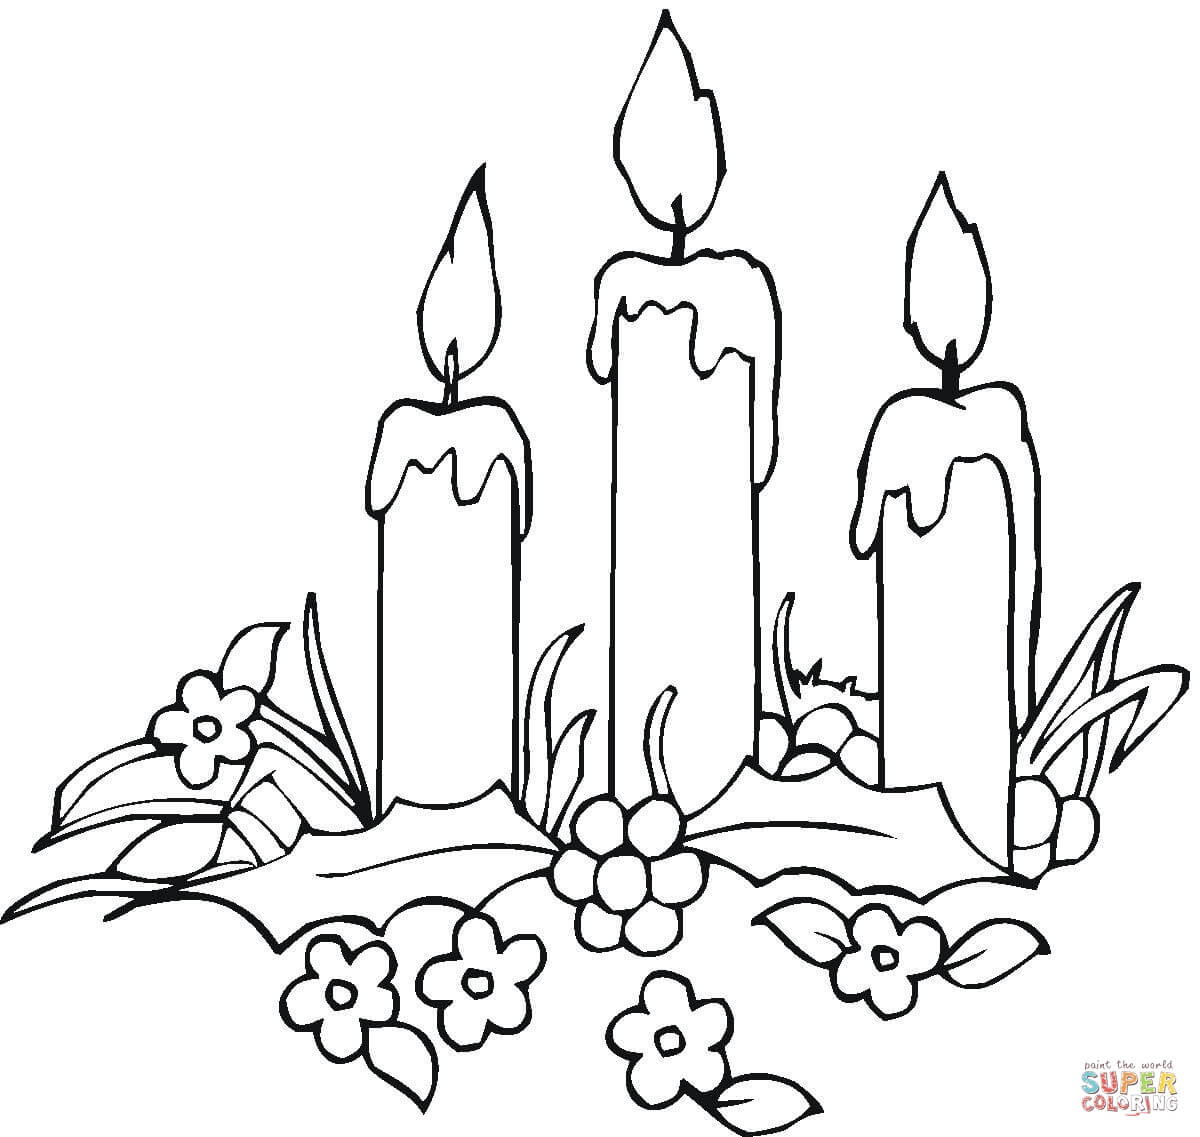 Ausmalbild: Kerzen Mit Blumen | Ausmalbilder Kostenlos Zum mit Kerzen Ausmalbilder